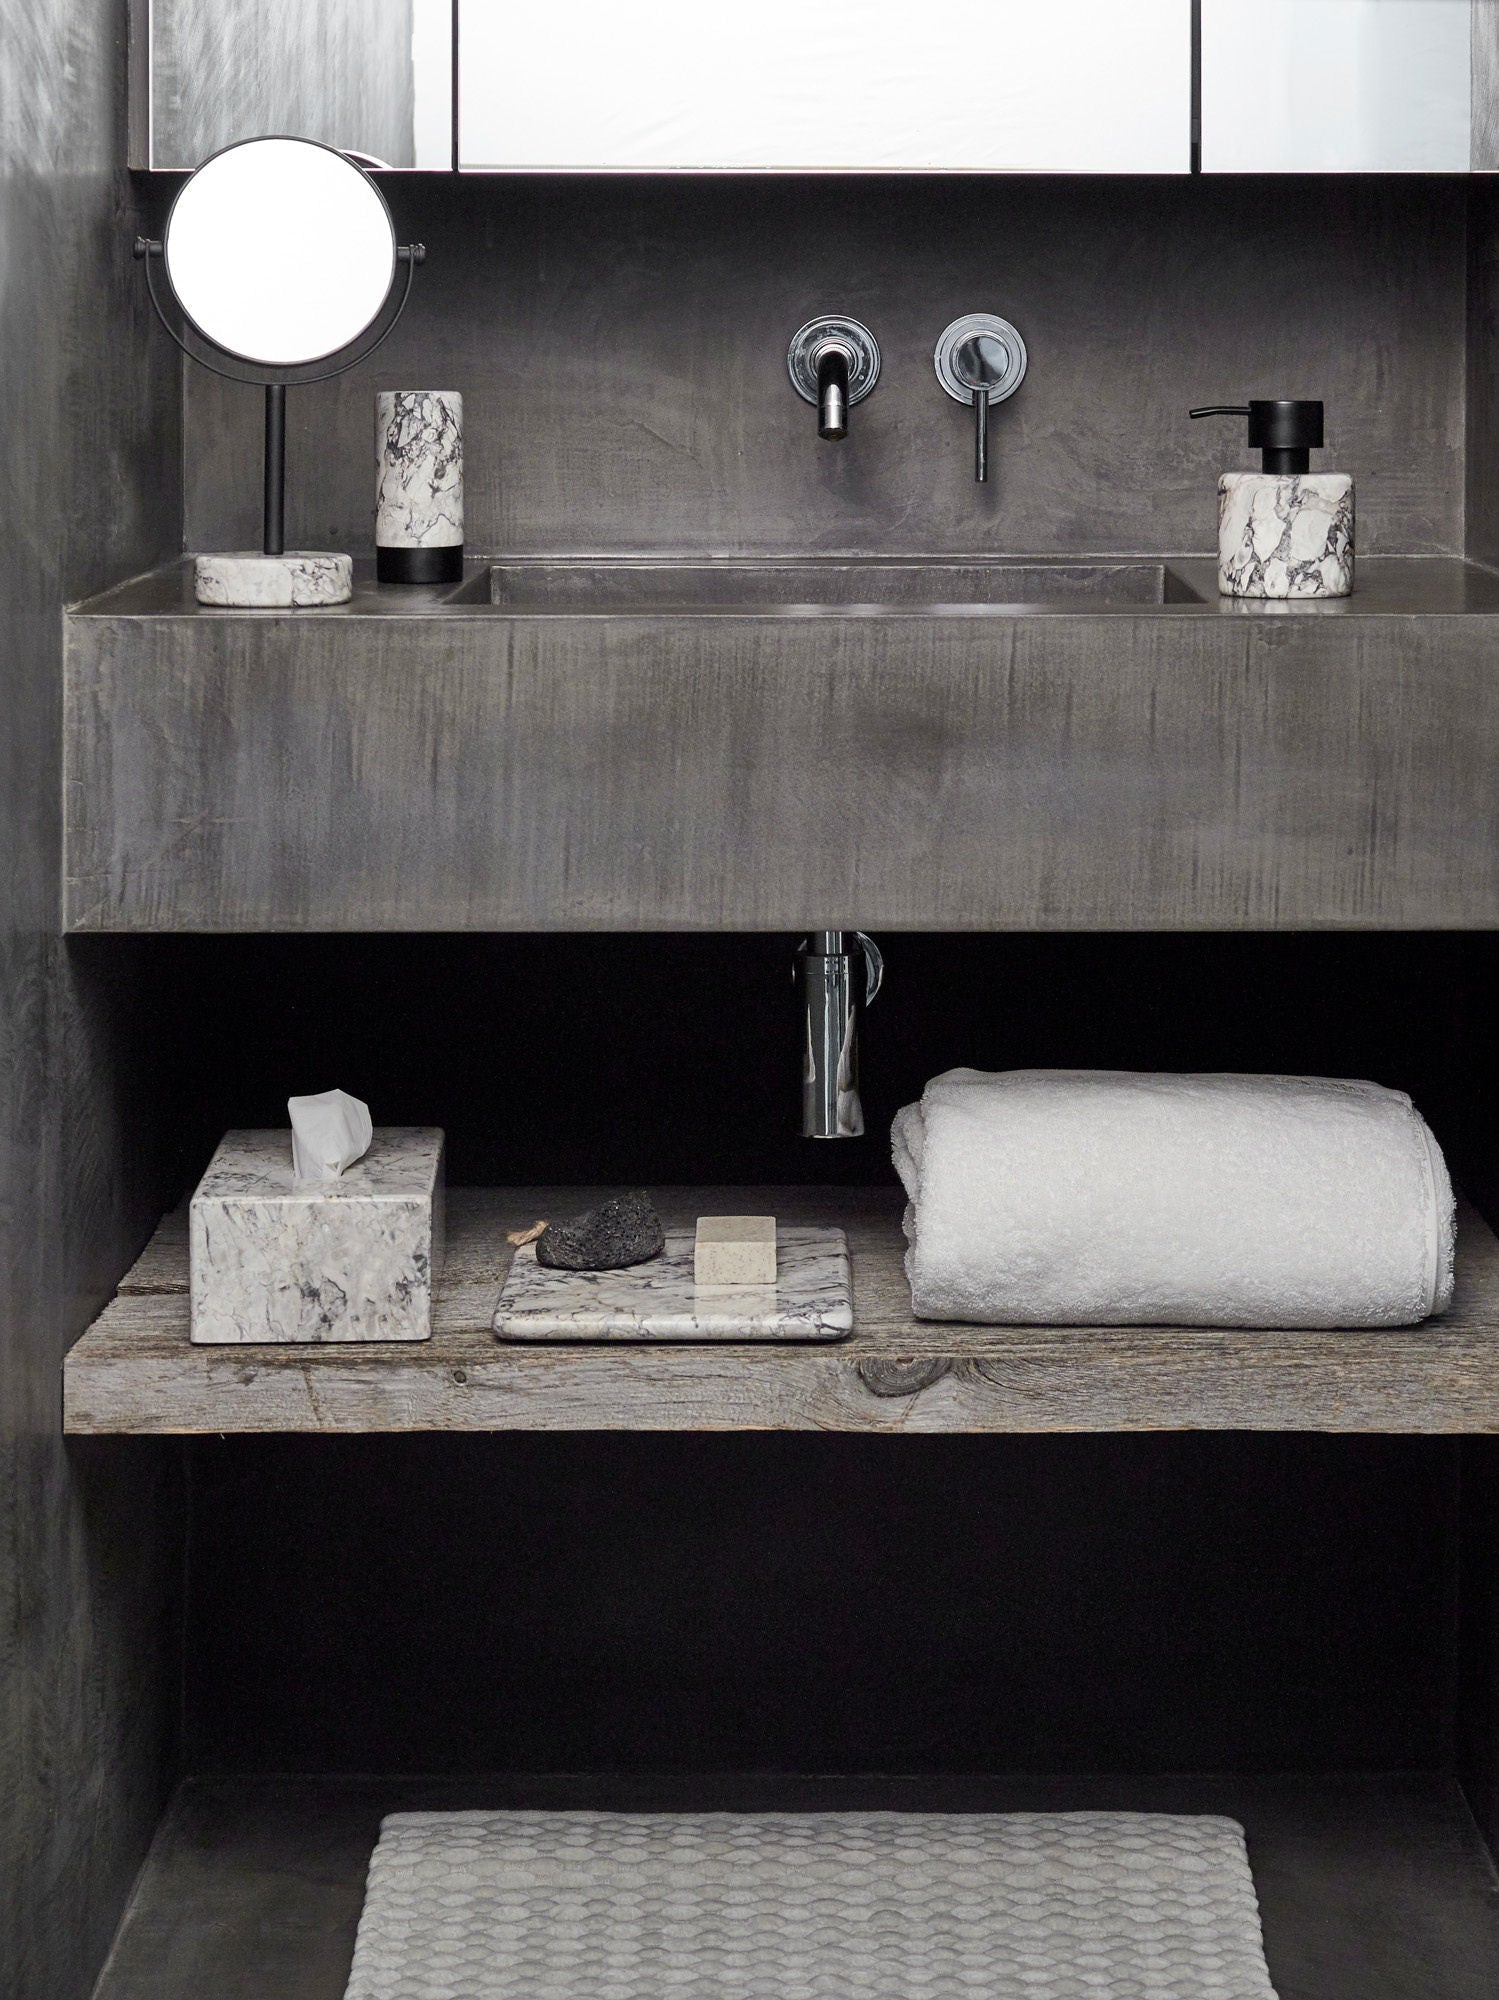 White Marble Design Bathroom Accessories - Luxury Standing Spare Toilet Paper Holder - |VESIMI Design| Luxury and Rustic bathrooms online